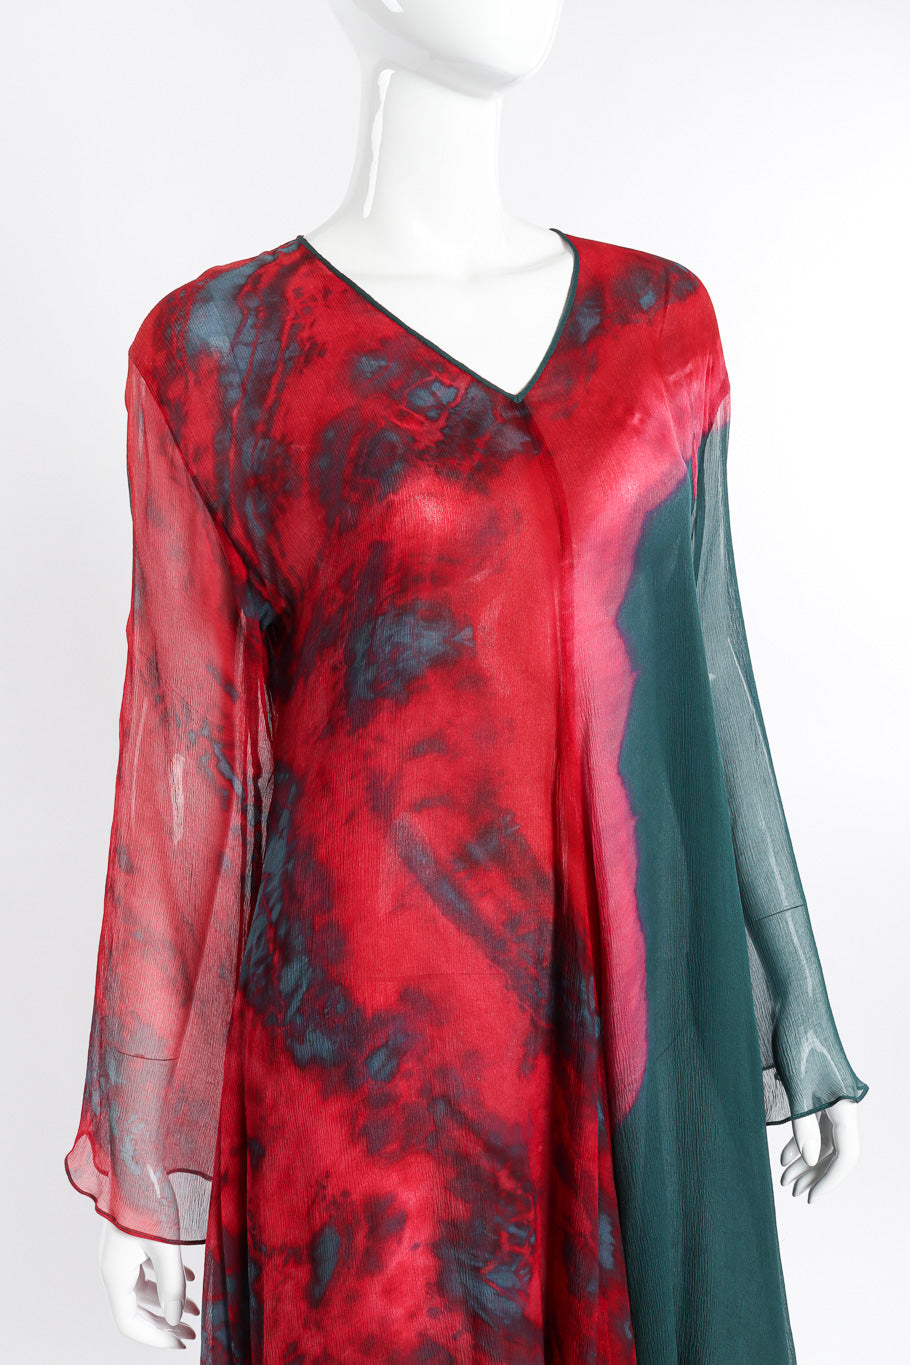 Vintage Carole Dolighan Silk Tie Dye Tunic Dress front view on mannequin closeup @Recessla